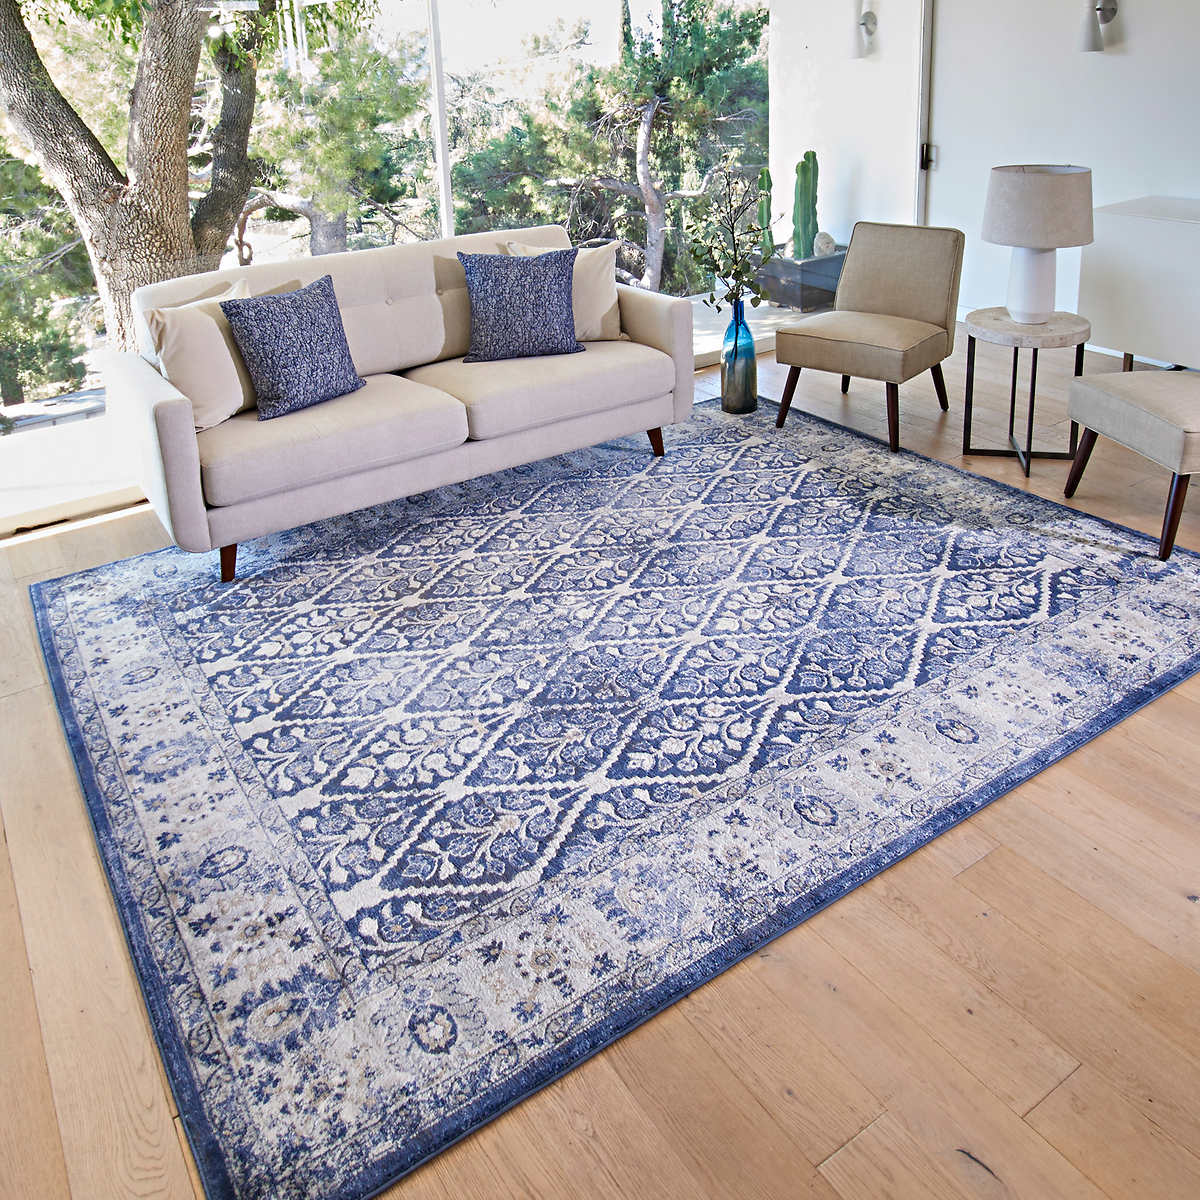 Deep Blue Sea Water Bedroom Floor Area Rugs Kitchen Mat Home Decor Soft Carpet 